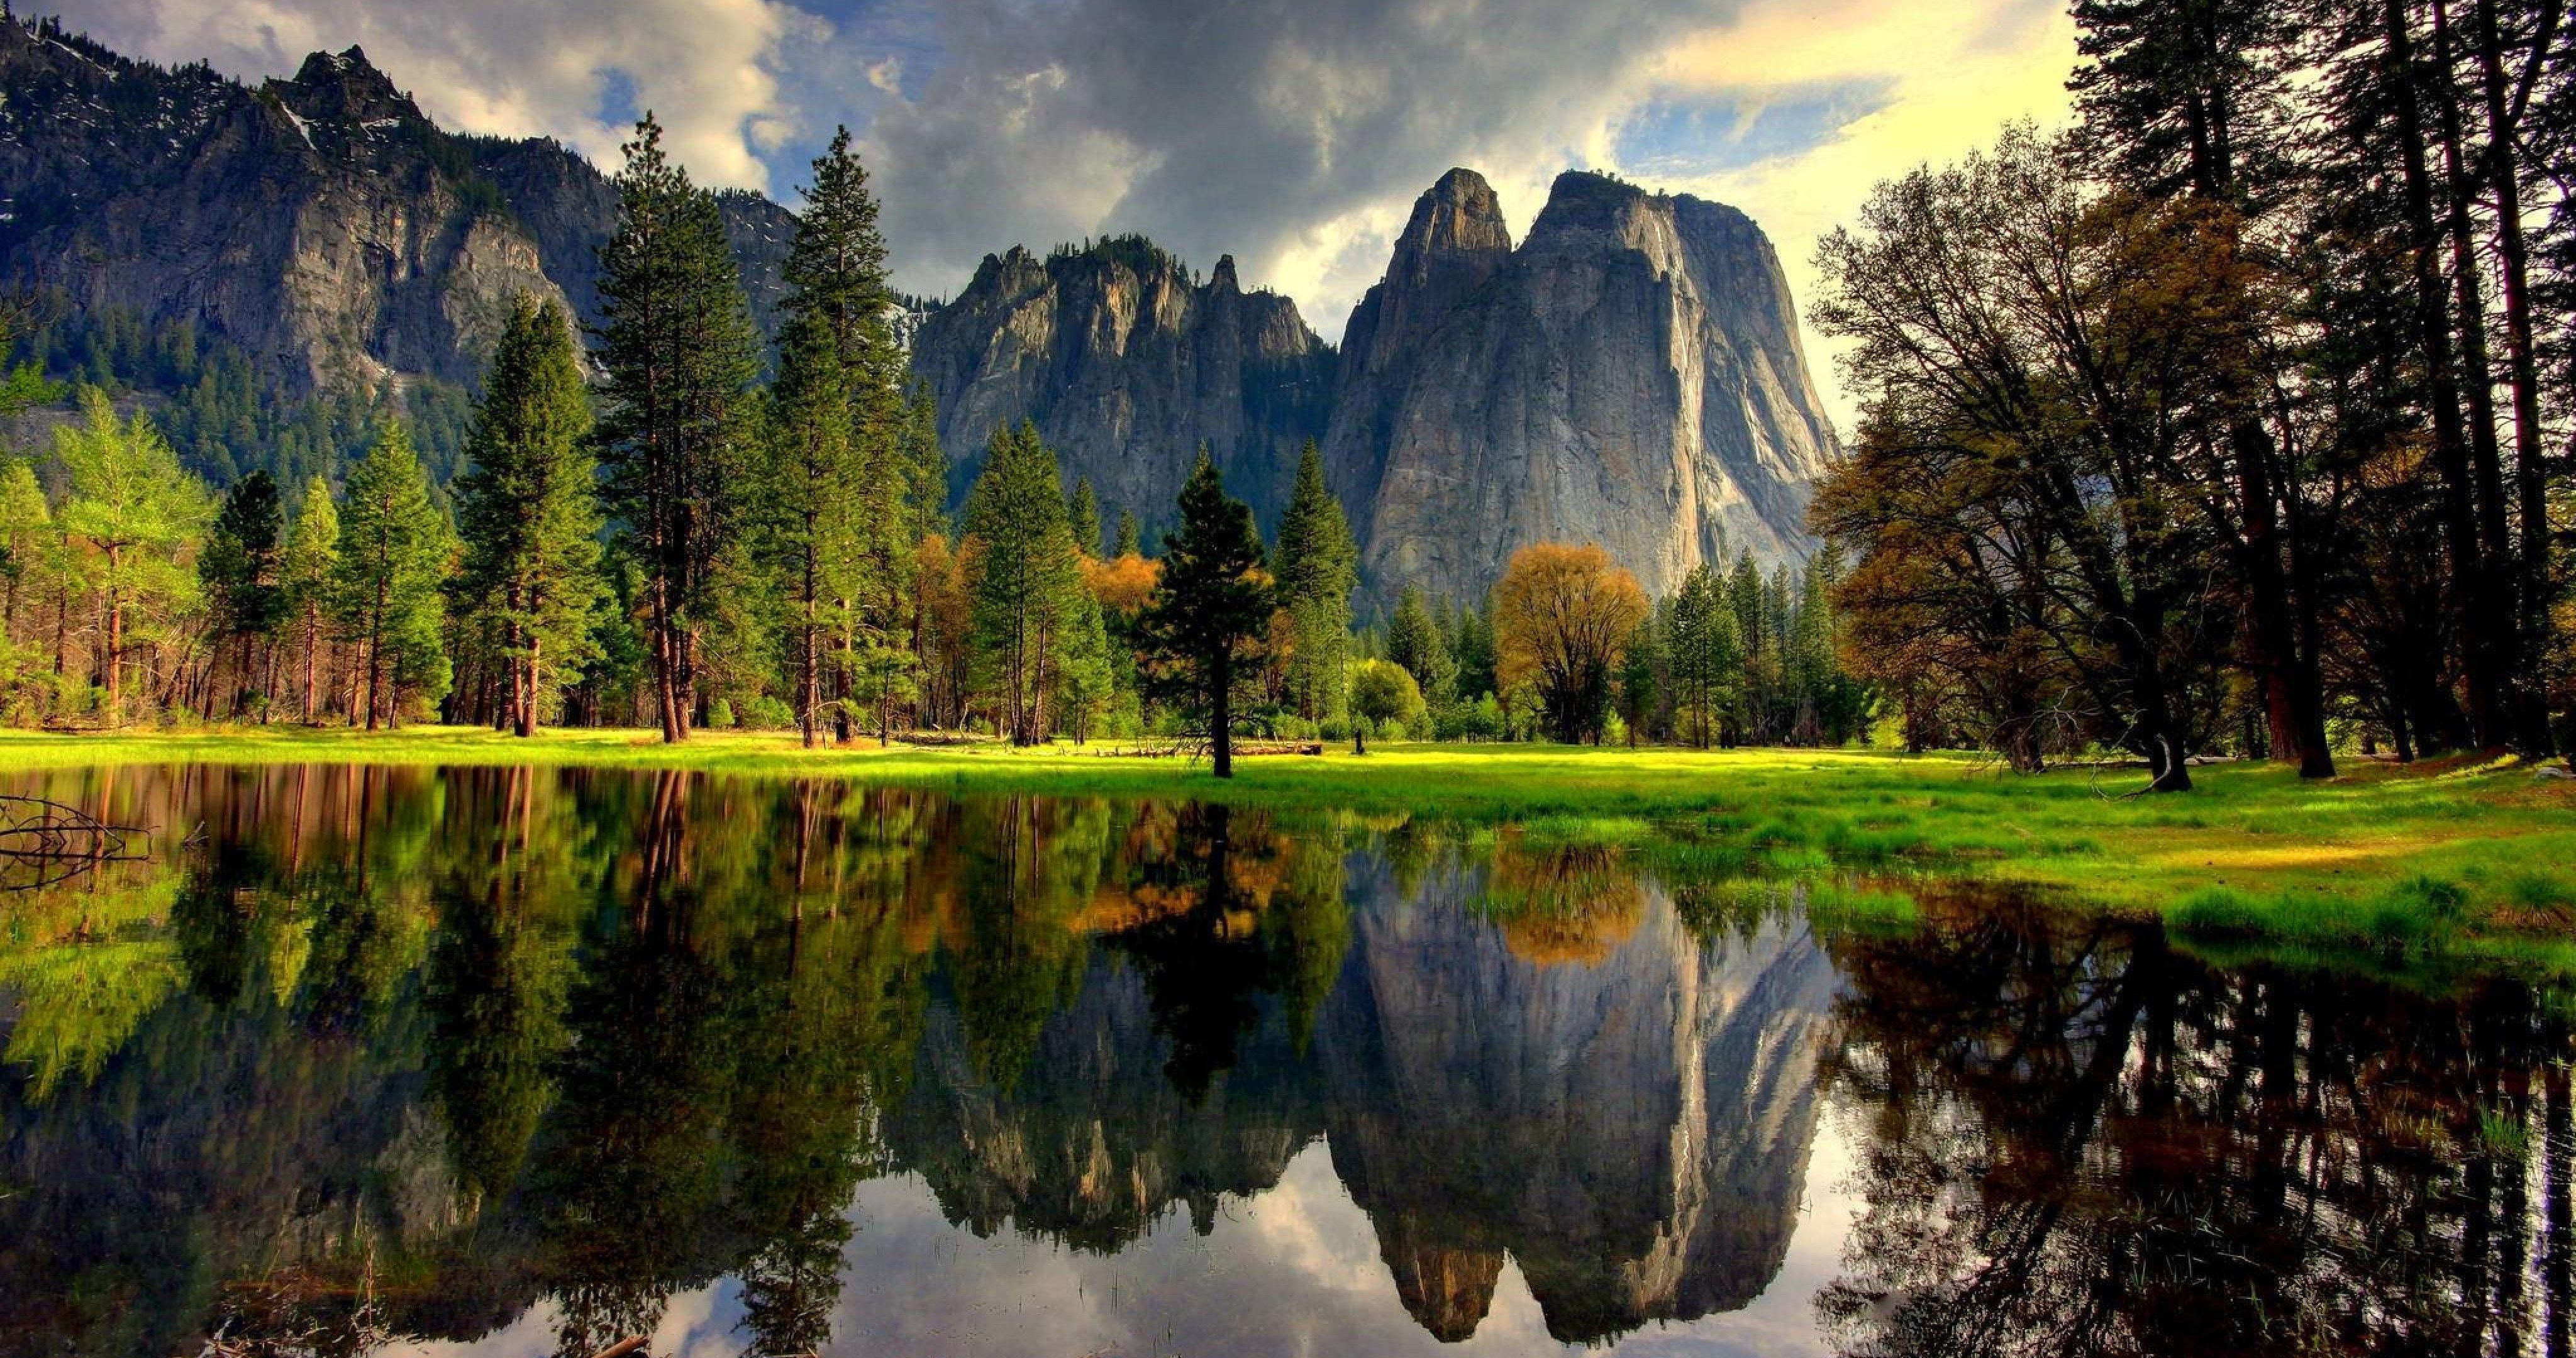 yosemite national park 24 4k ultra HD wallpaper. Camping world locations, National parks, Yosemite national park